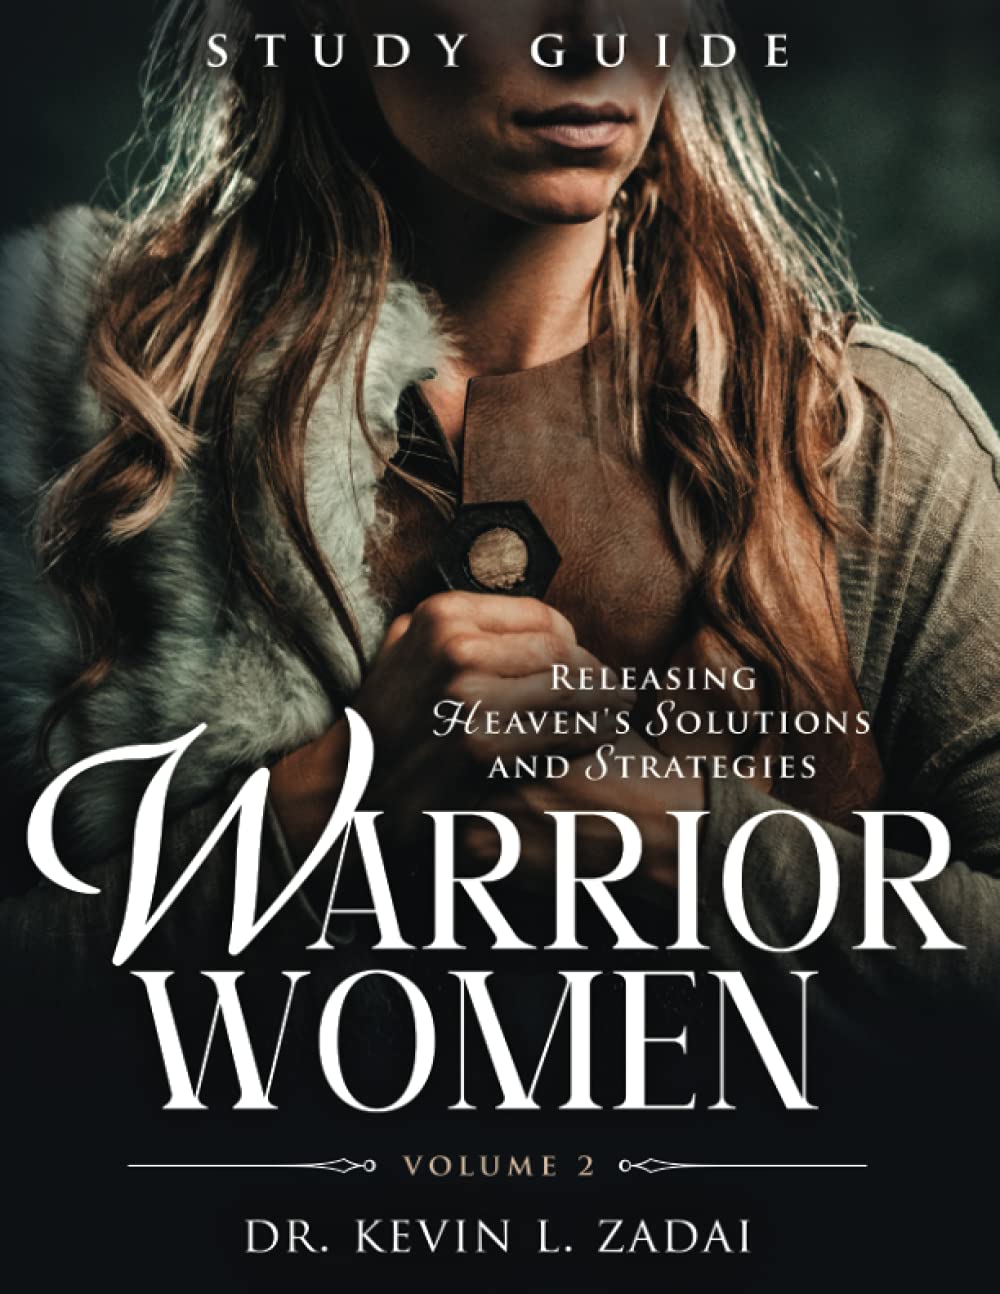 Warrior Women Volume 2: Releasing Heaven's Solutions and Strategies - Study Guide